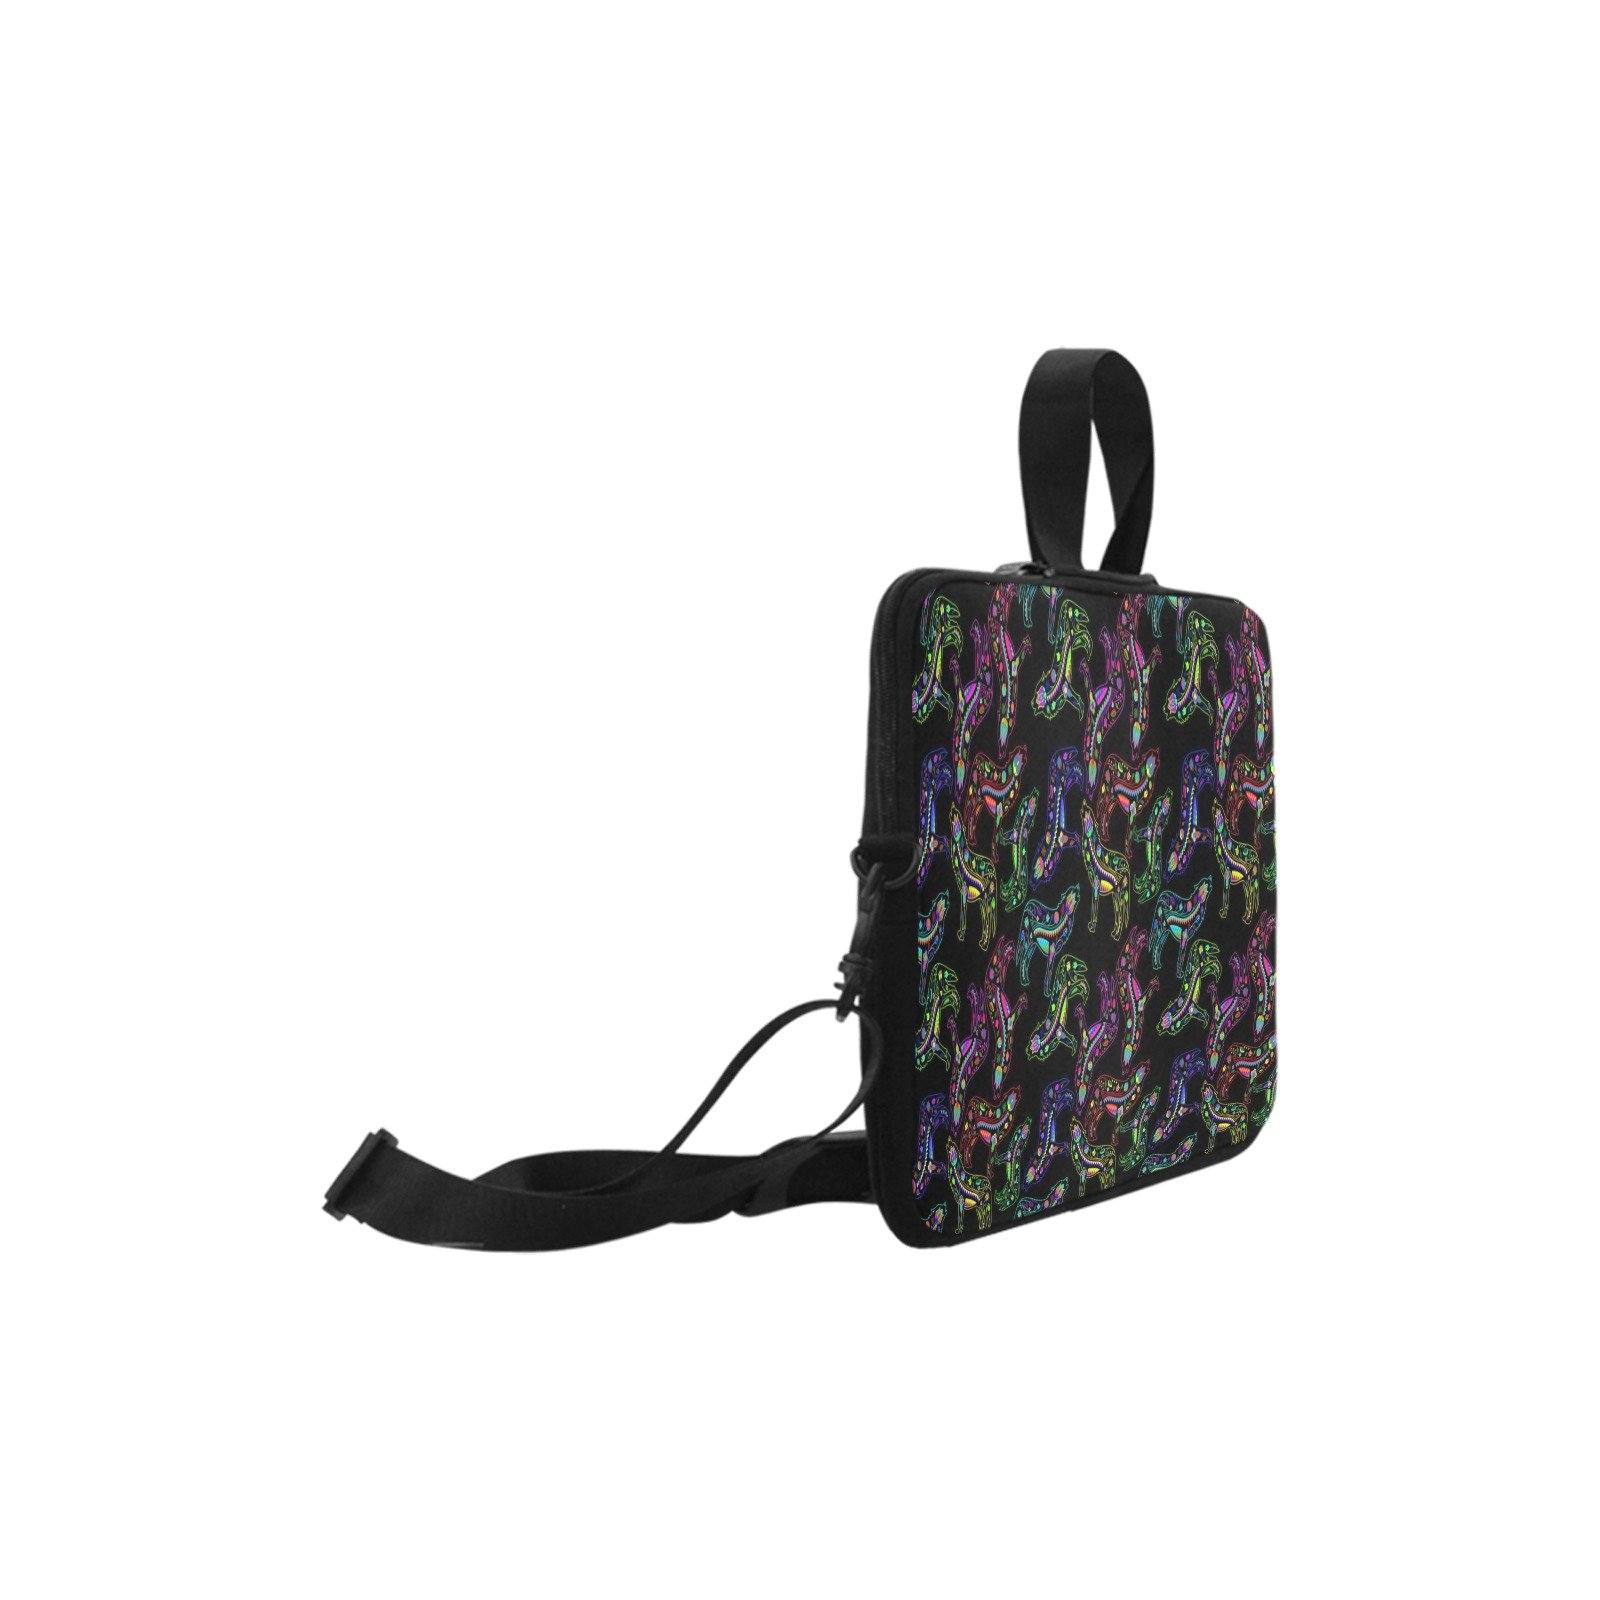 Floral Wolves Laptop Handbags 14" bag e-joyer 